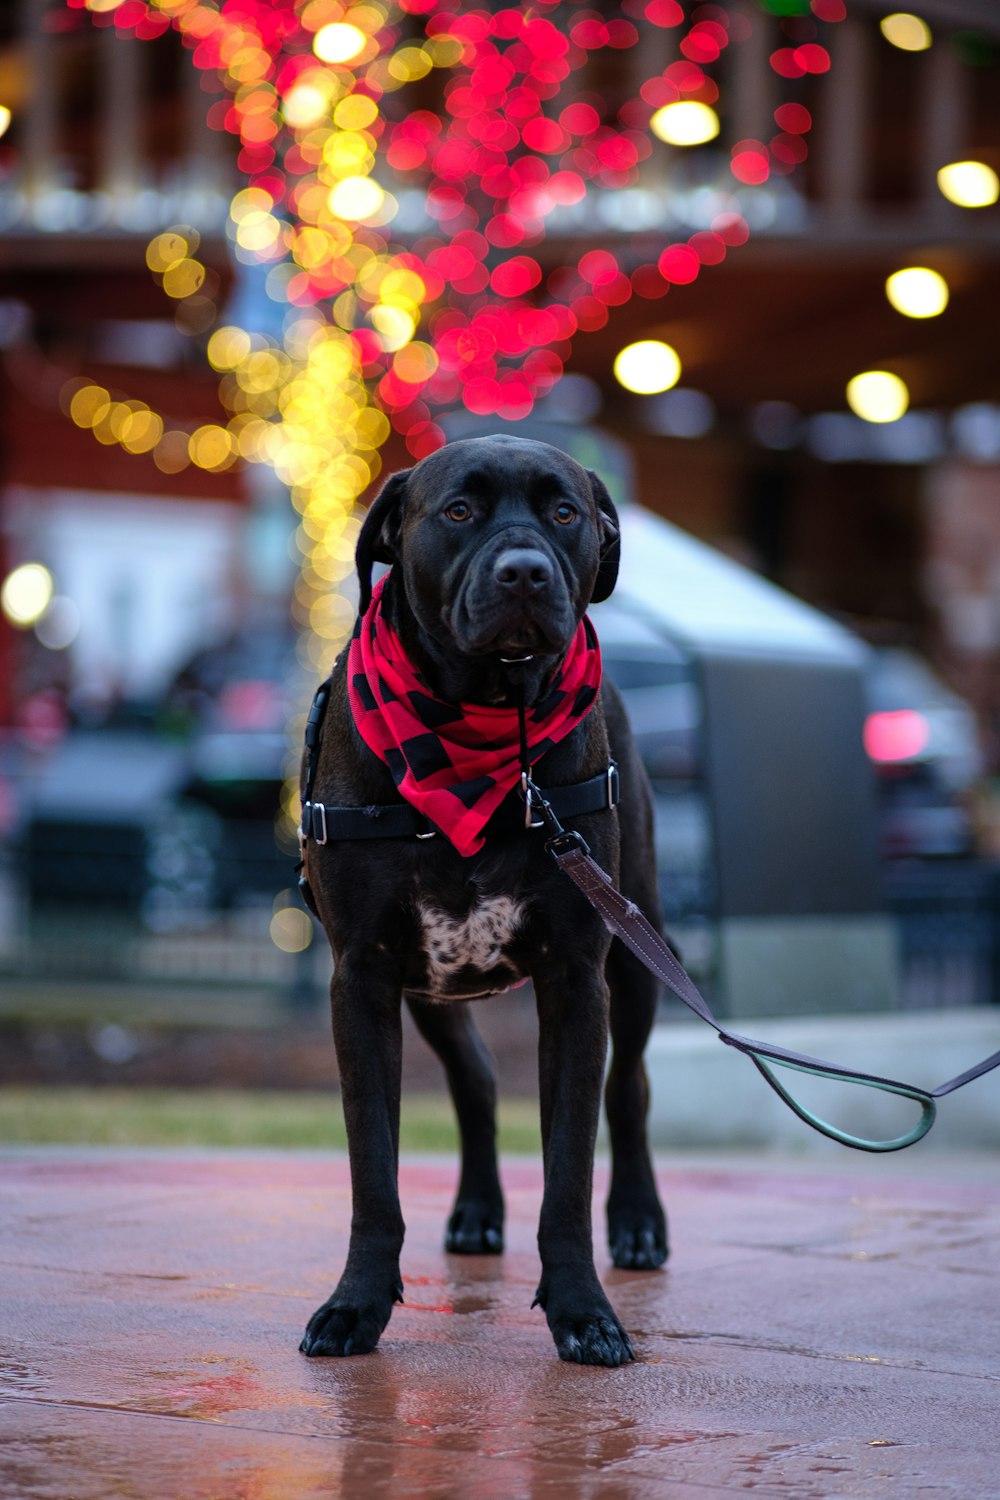 a black dog wearing a red bandana and leash